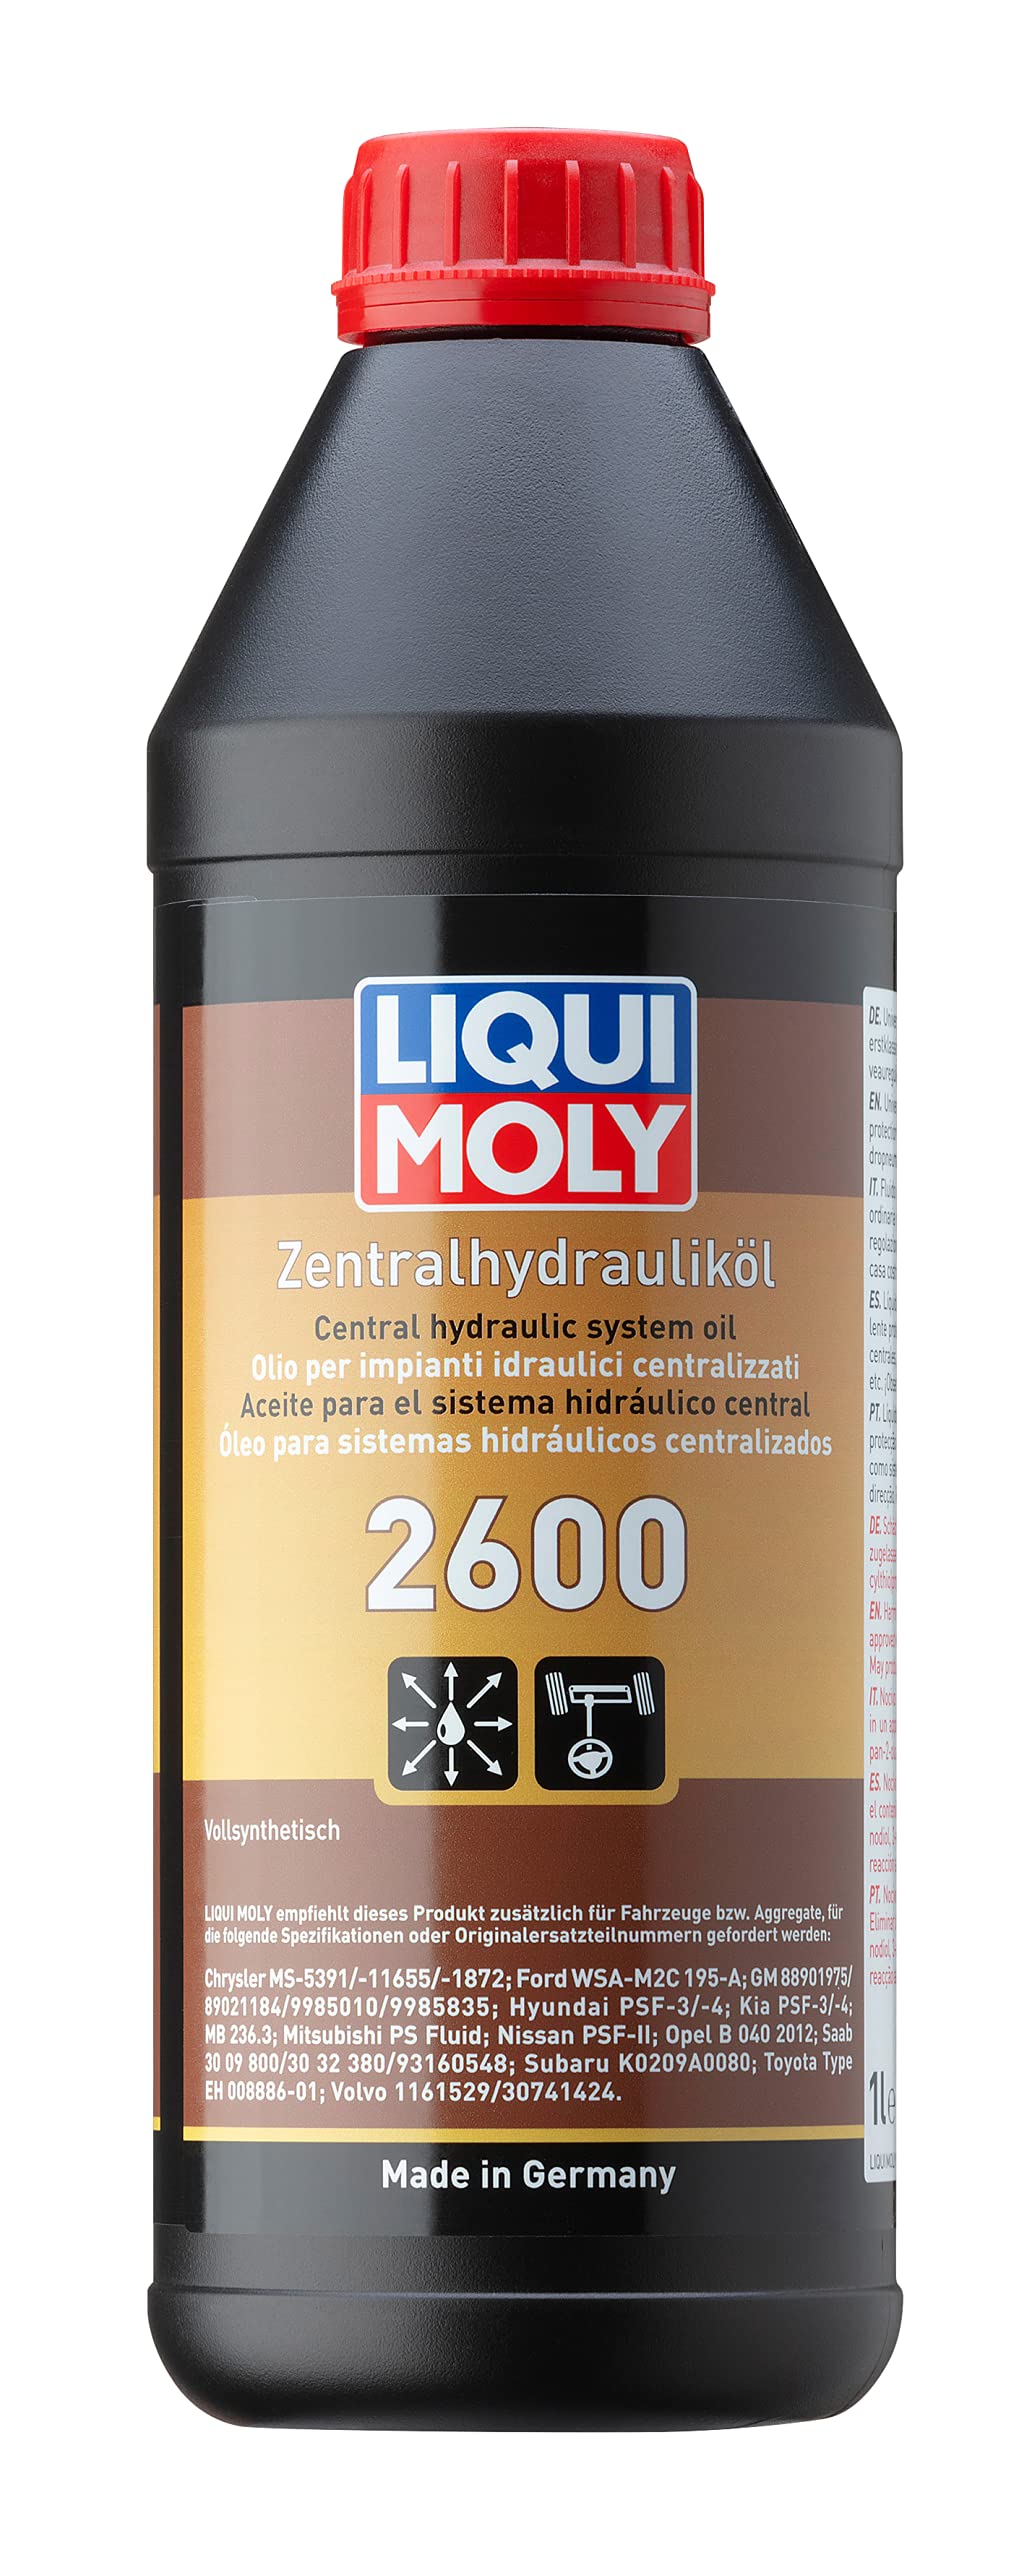 LIQUI MOLY GmbH Zentralhydrauliköl 2600 von LIQUI MOLY GmbH